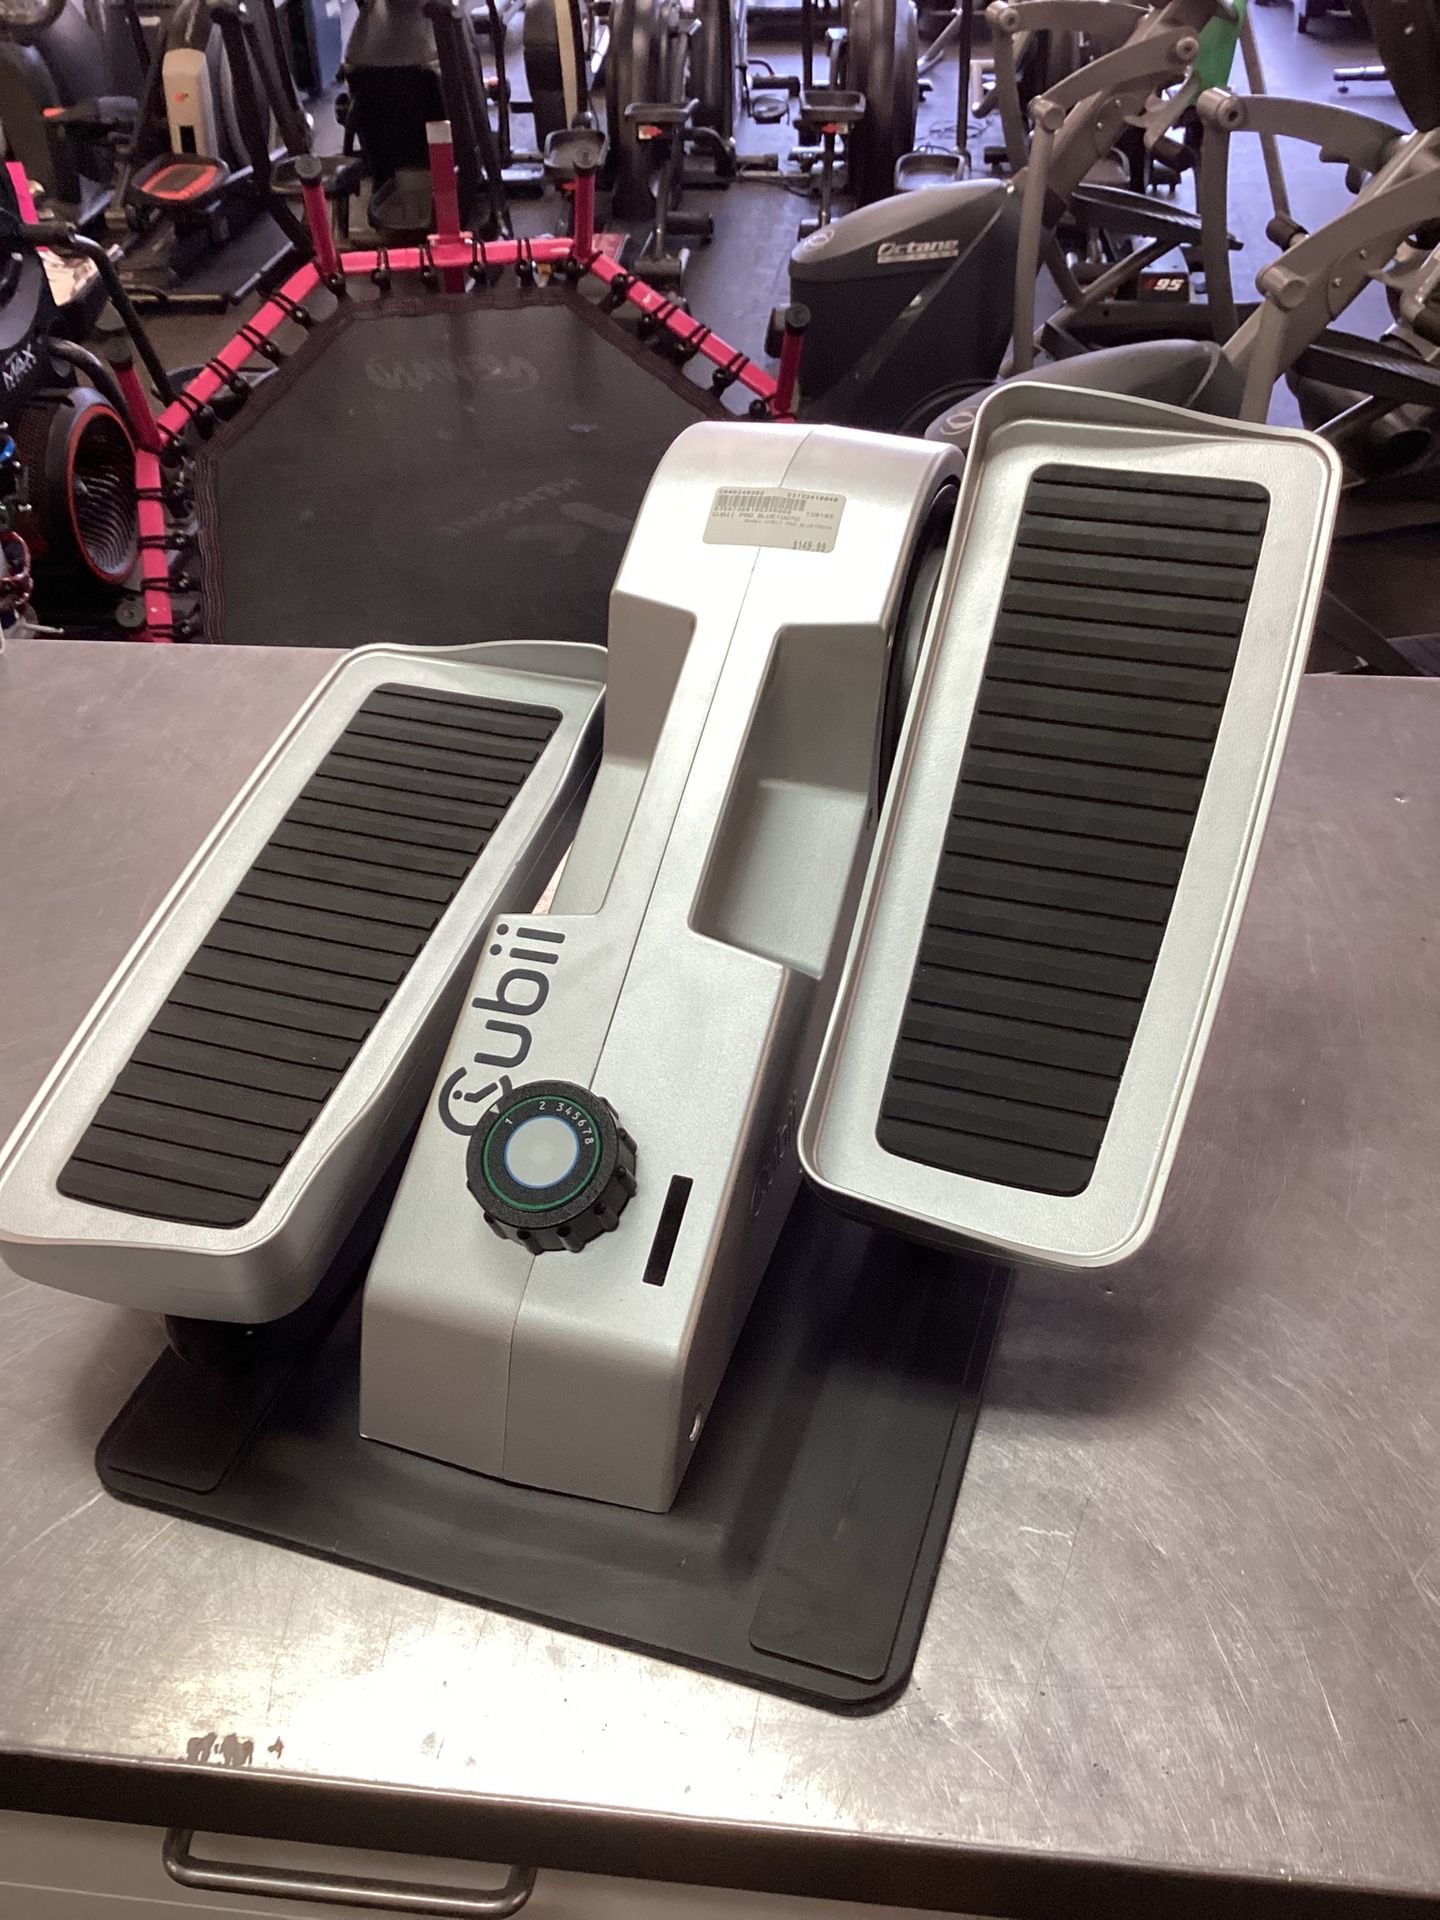 Cubii Pro Bluetooth Seated Elliptical Under Desk Elliptical Bike Like New